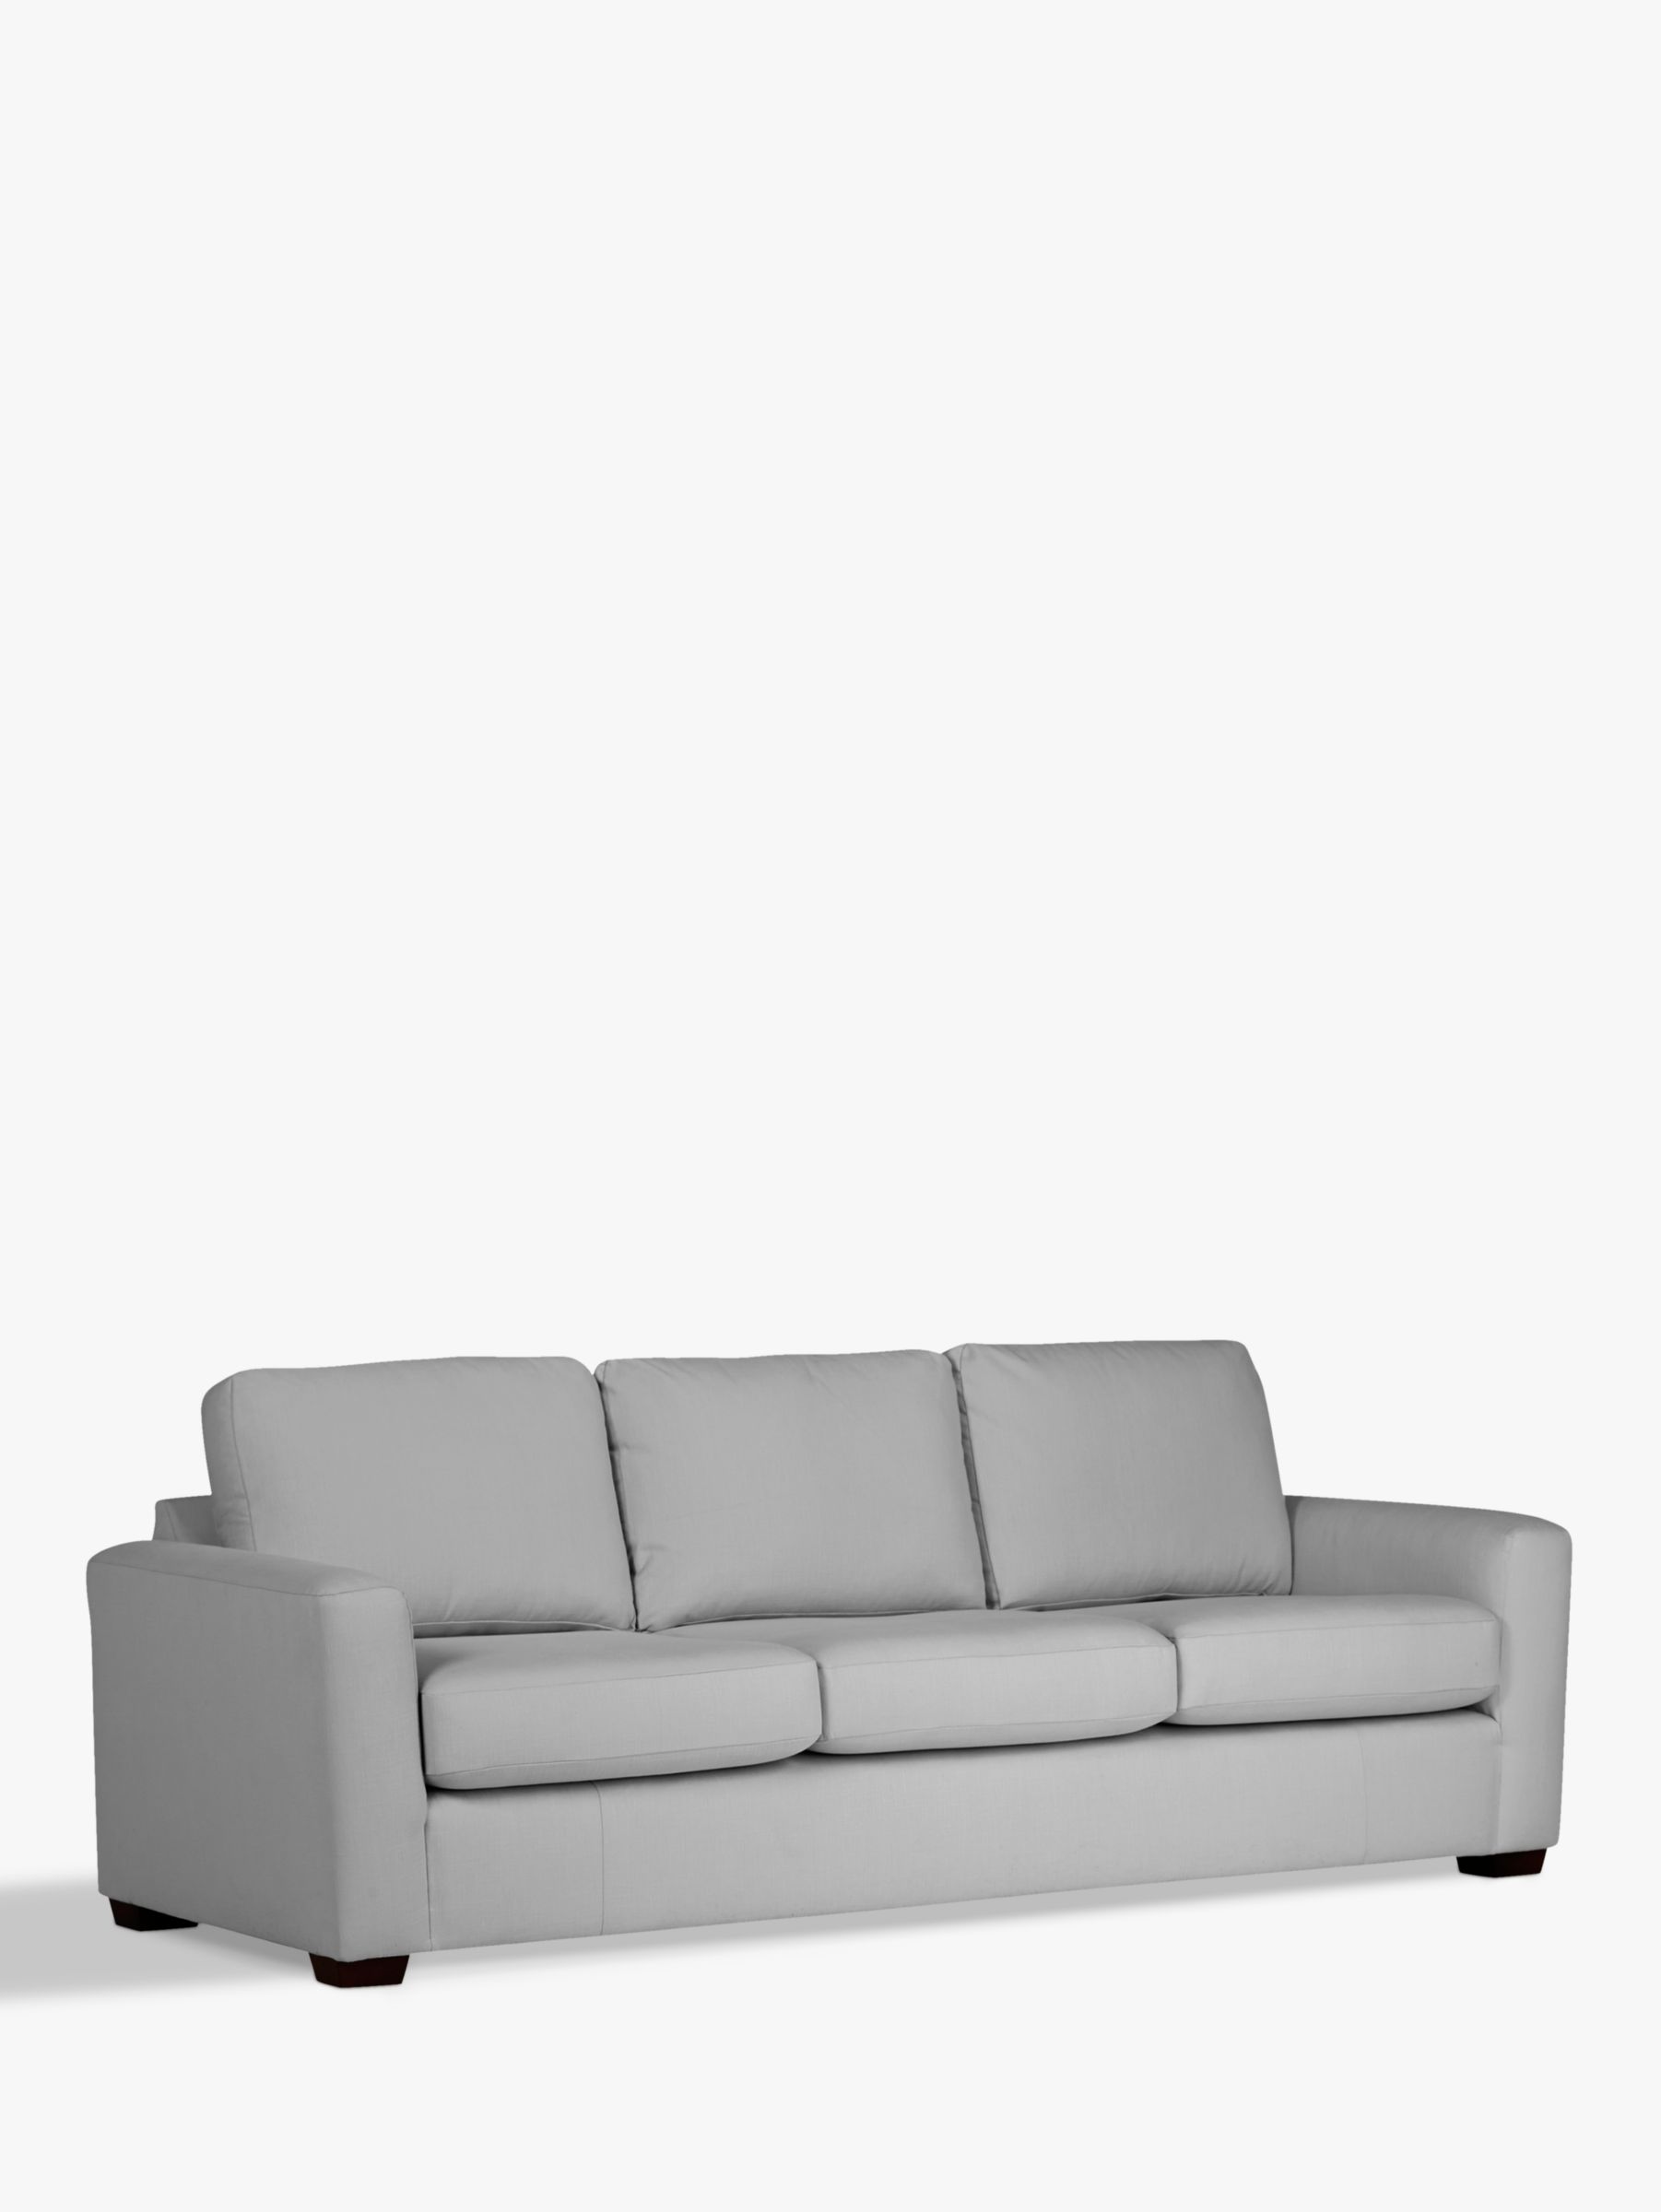 John Lewis Oliver Grand 4 Seater Sofa